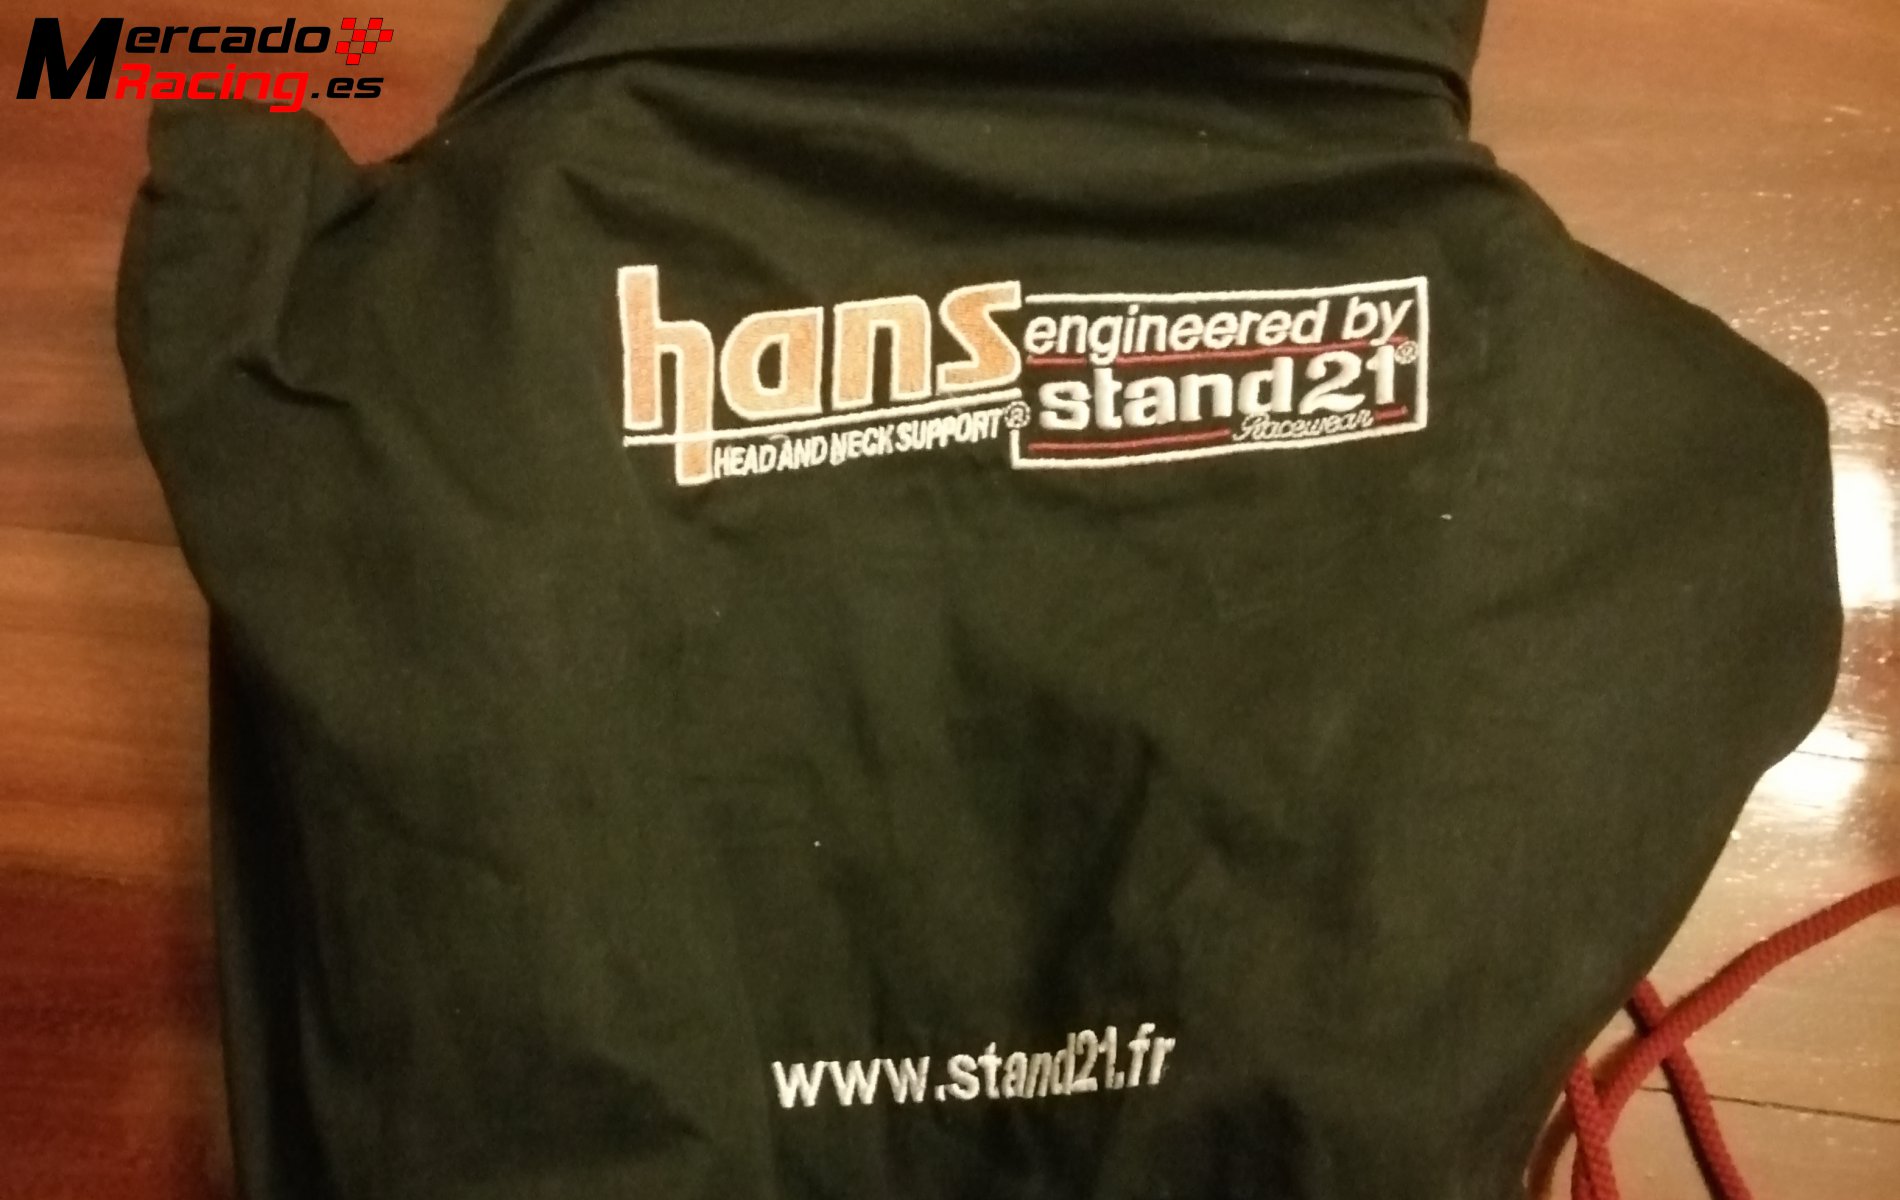 Hans stand 21